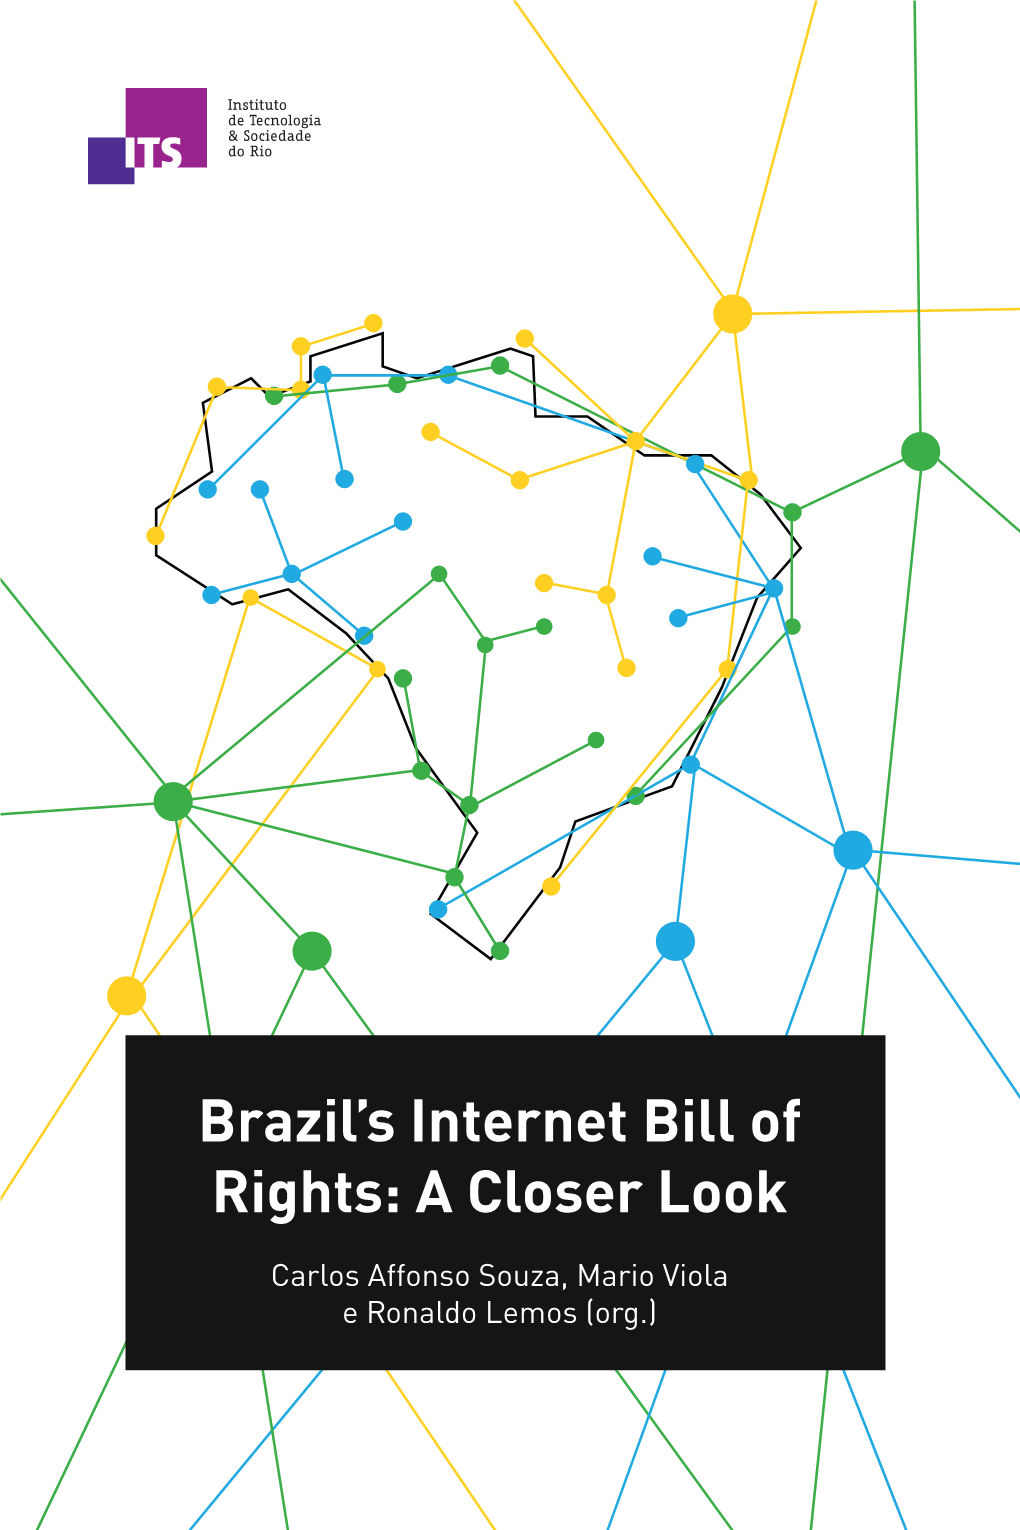 Brazil's Internet Bill of Rights: a Closer Look